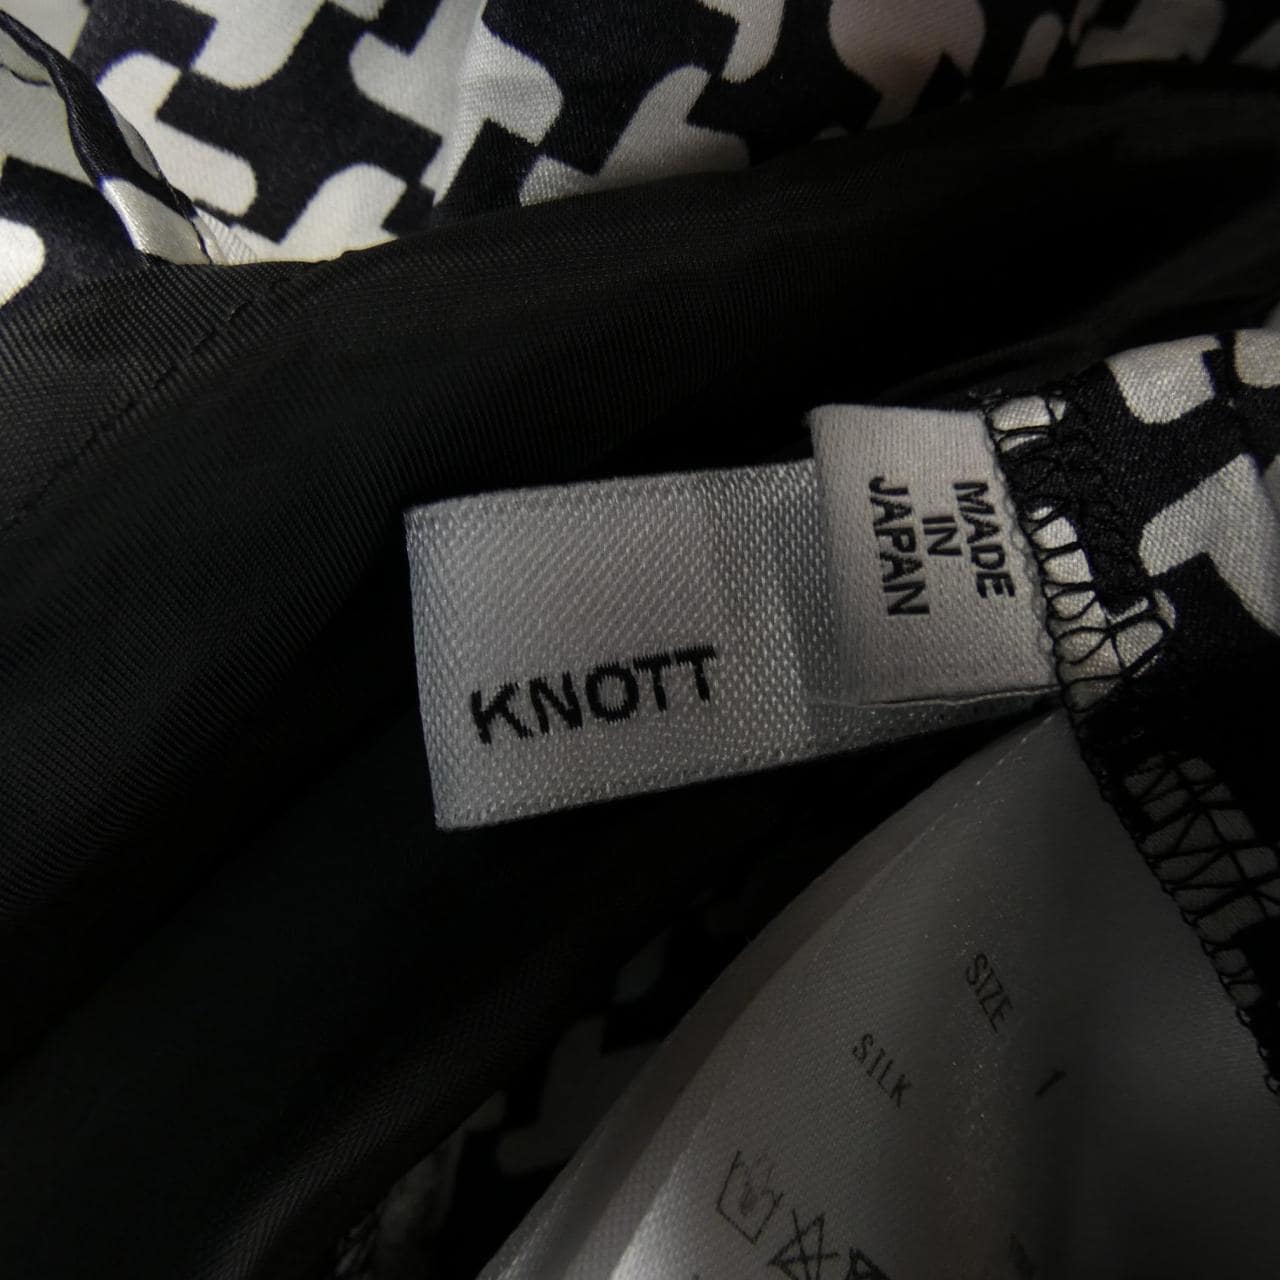 knot KNOTT dress